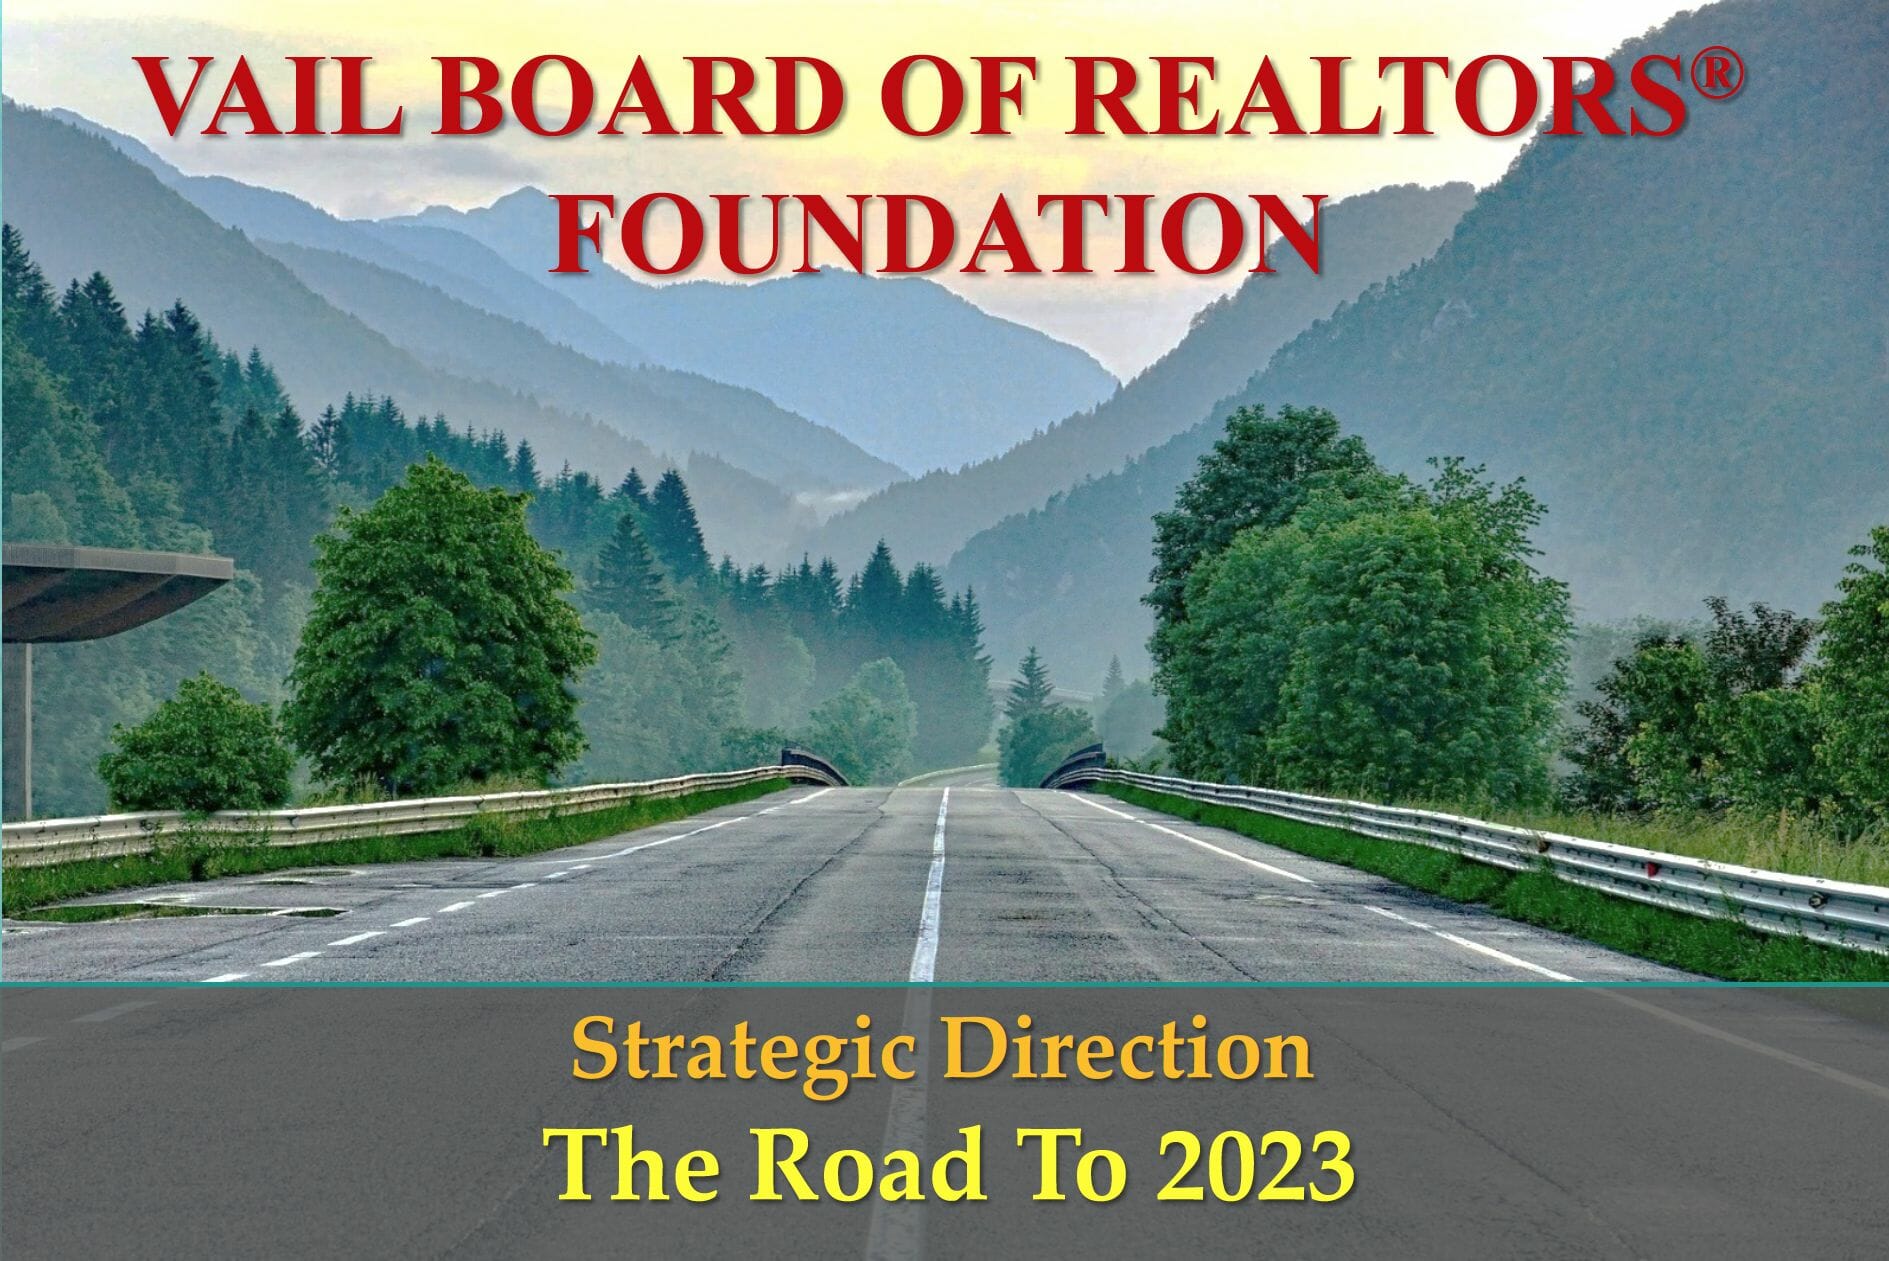 VBR Foundation Strategic Direction image